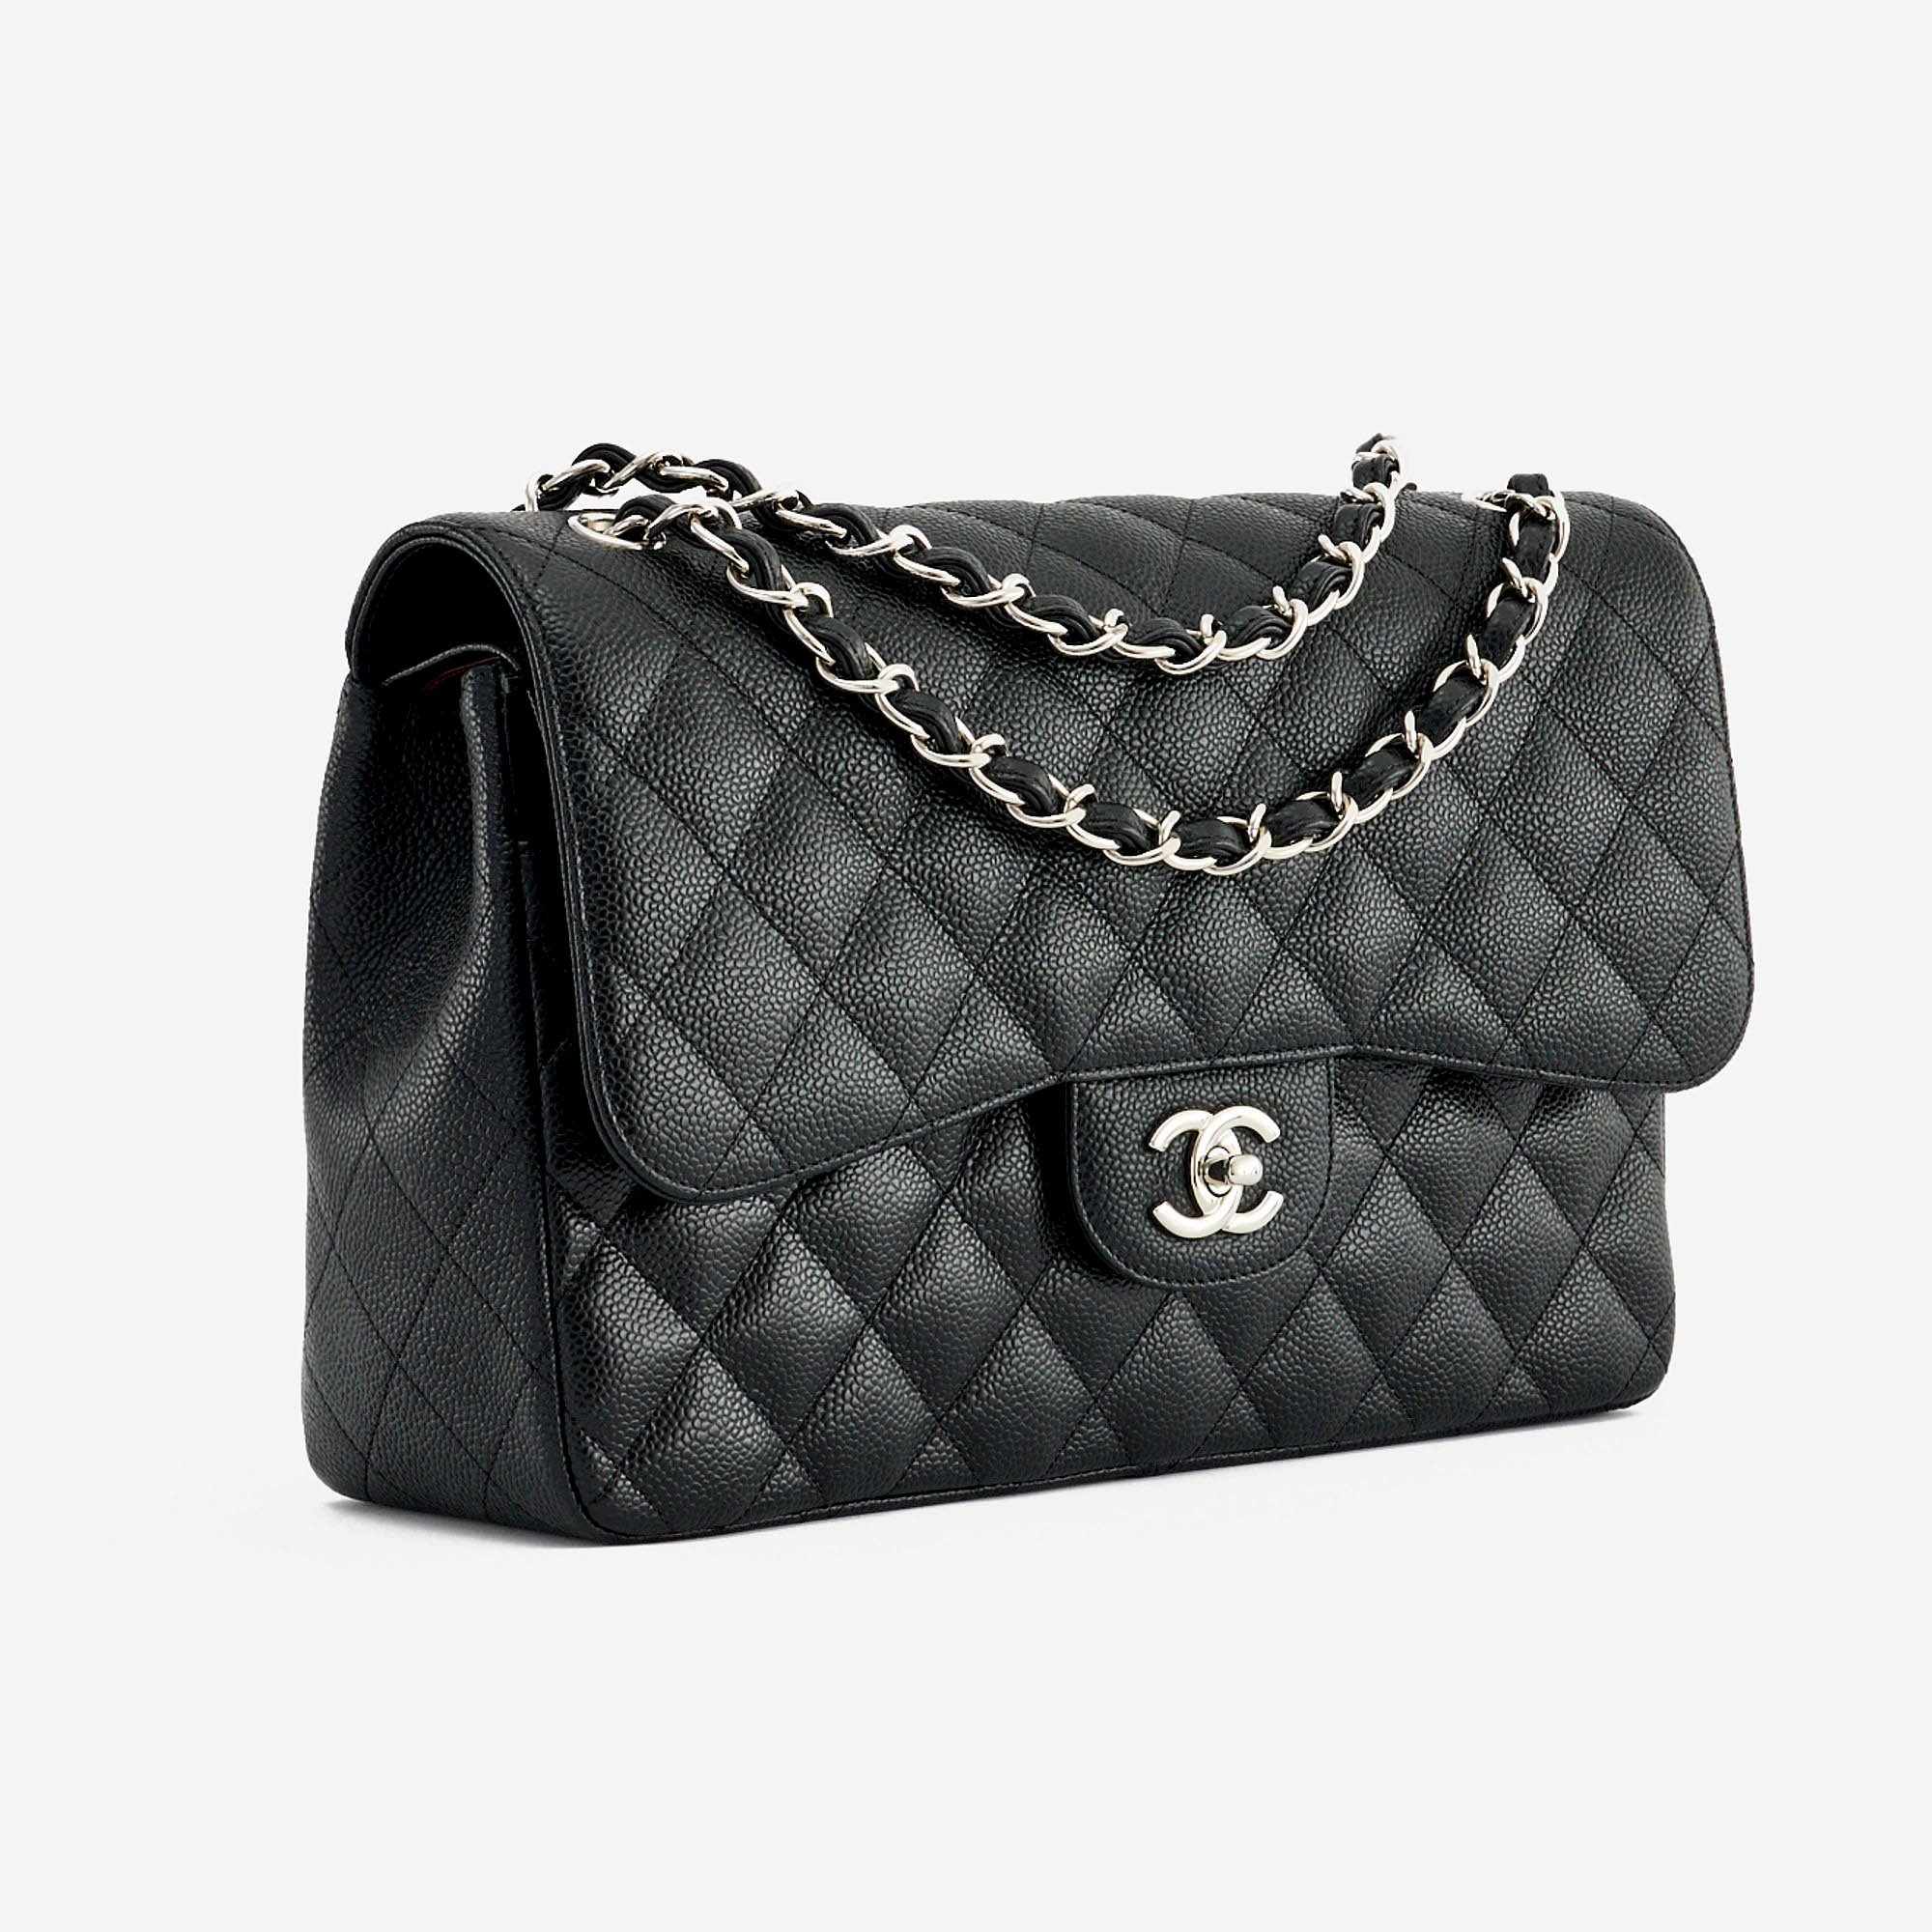 Chanel Large Classic Handbag Reviewed | Literacy Basics